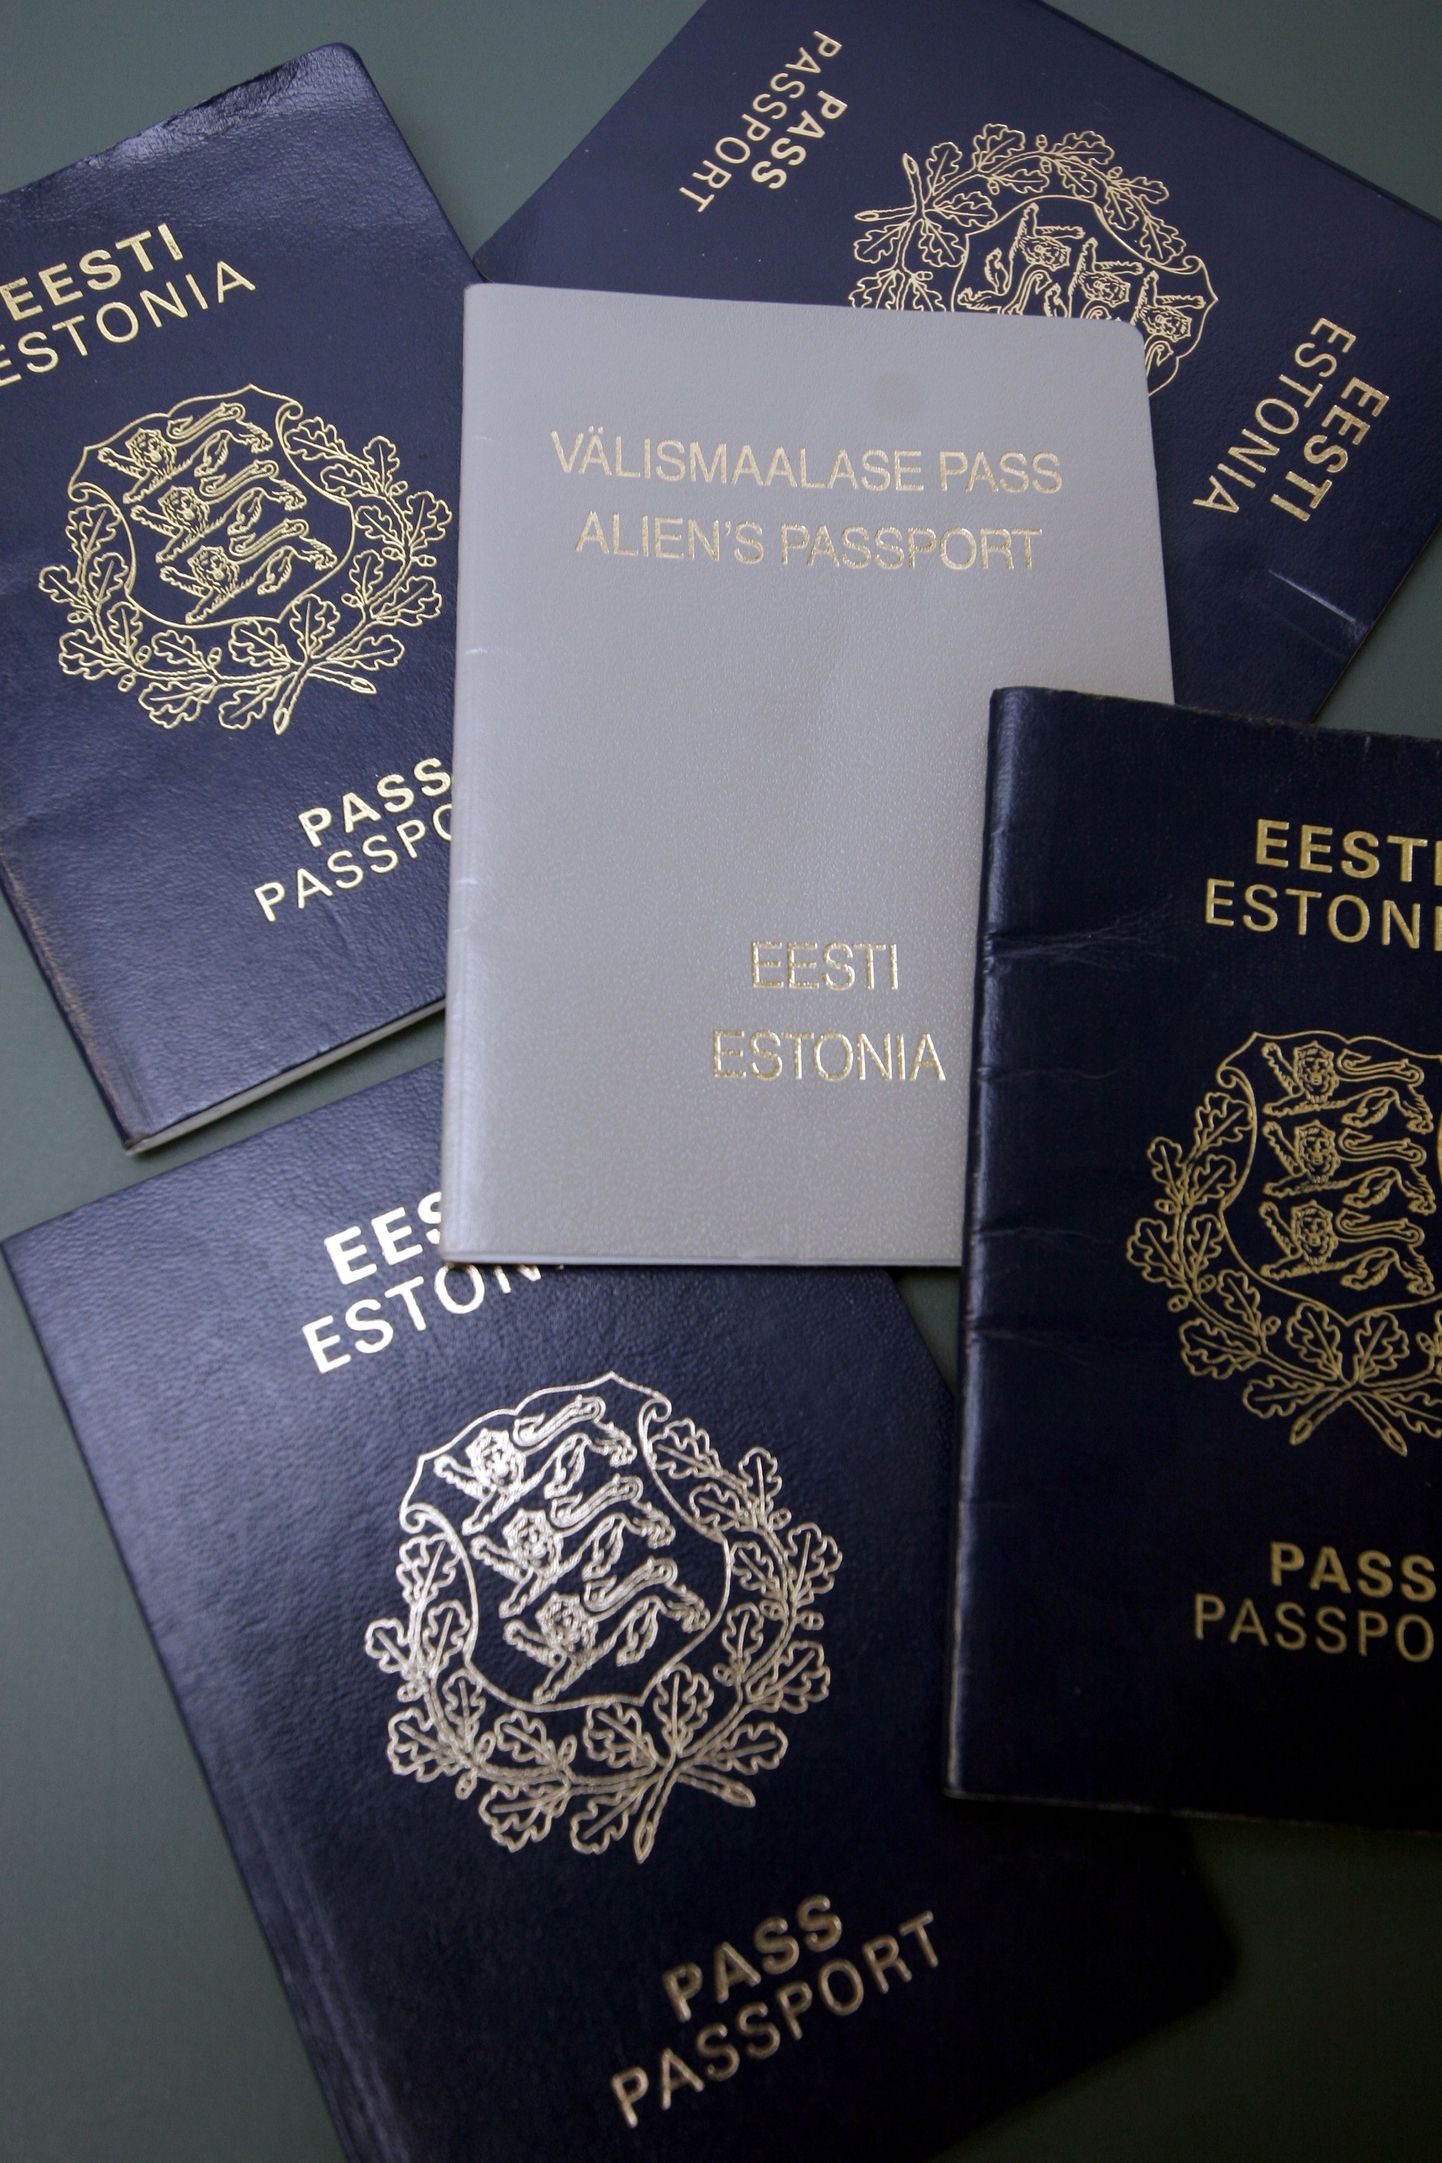 Pildil on Eesti ja Eestis väljastatav välismaalase pass.